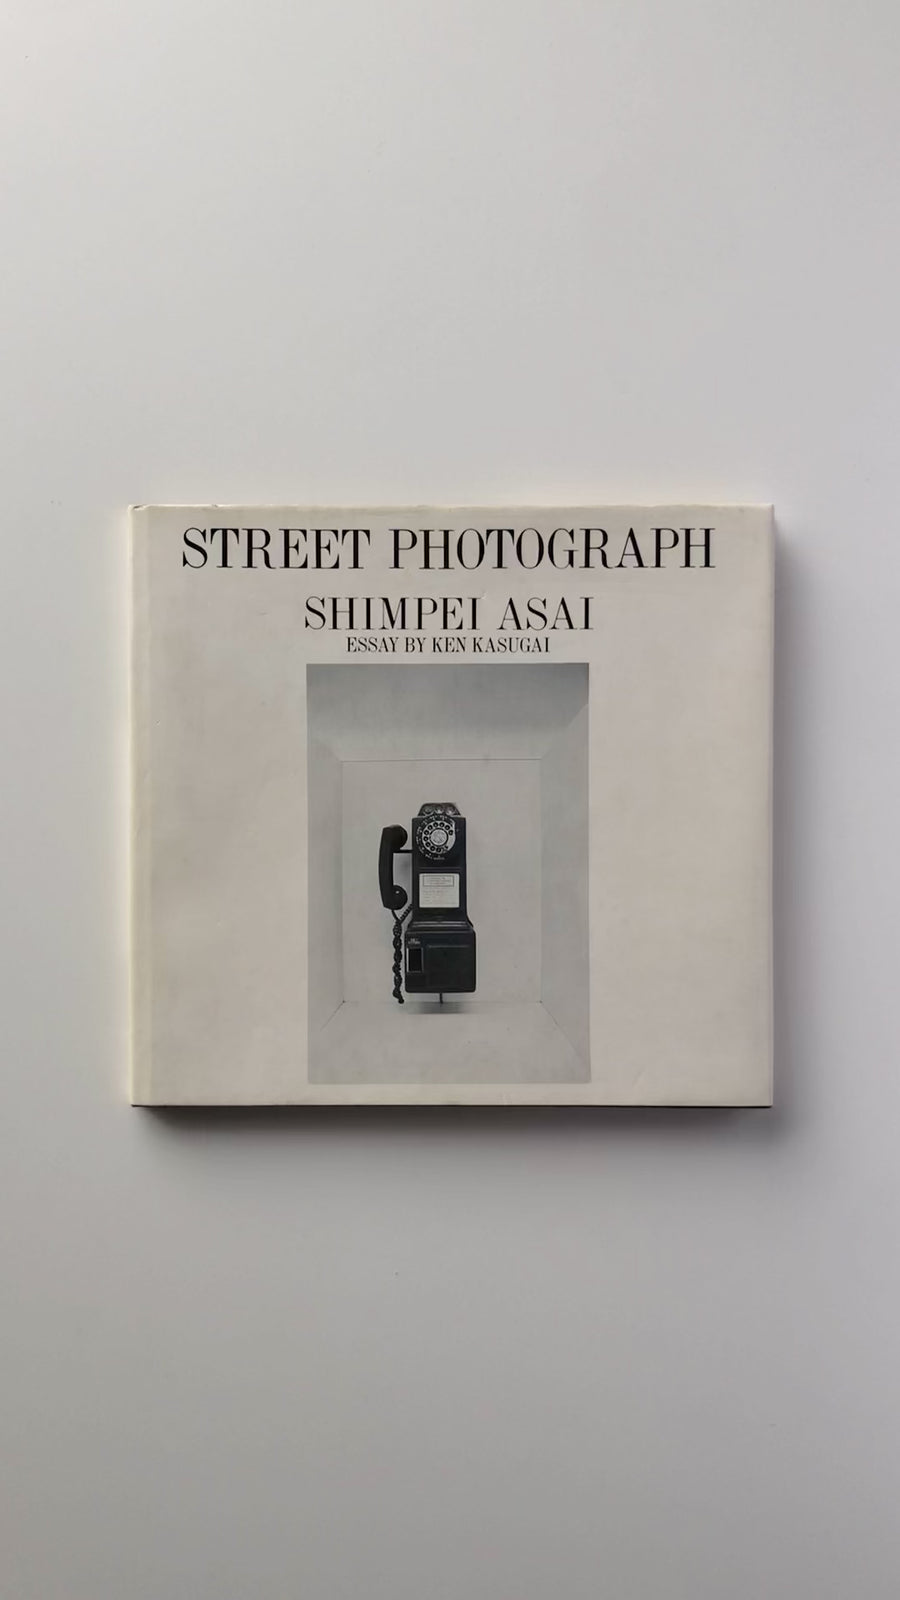 Street Photographs by Shimpei Asai